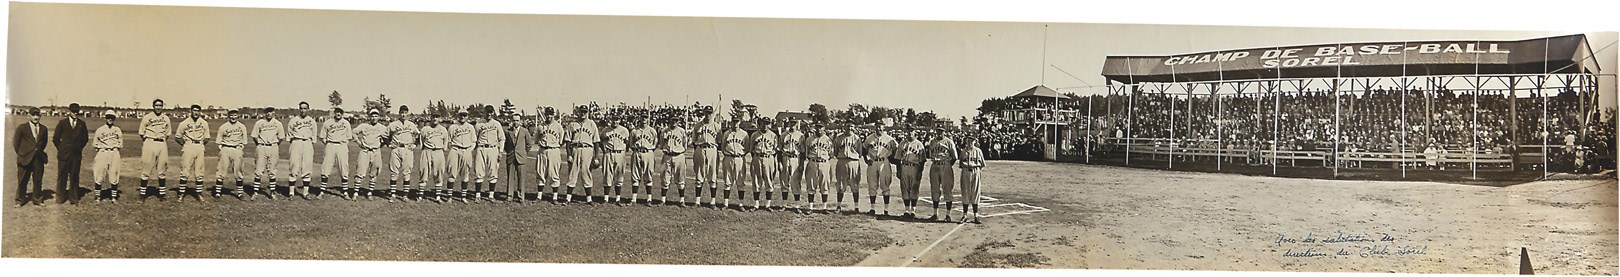 Negro League, Latin, Japanese & International Base - 1930s Baseball Club of Sorel Team Panorama